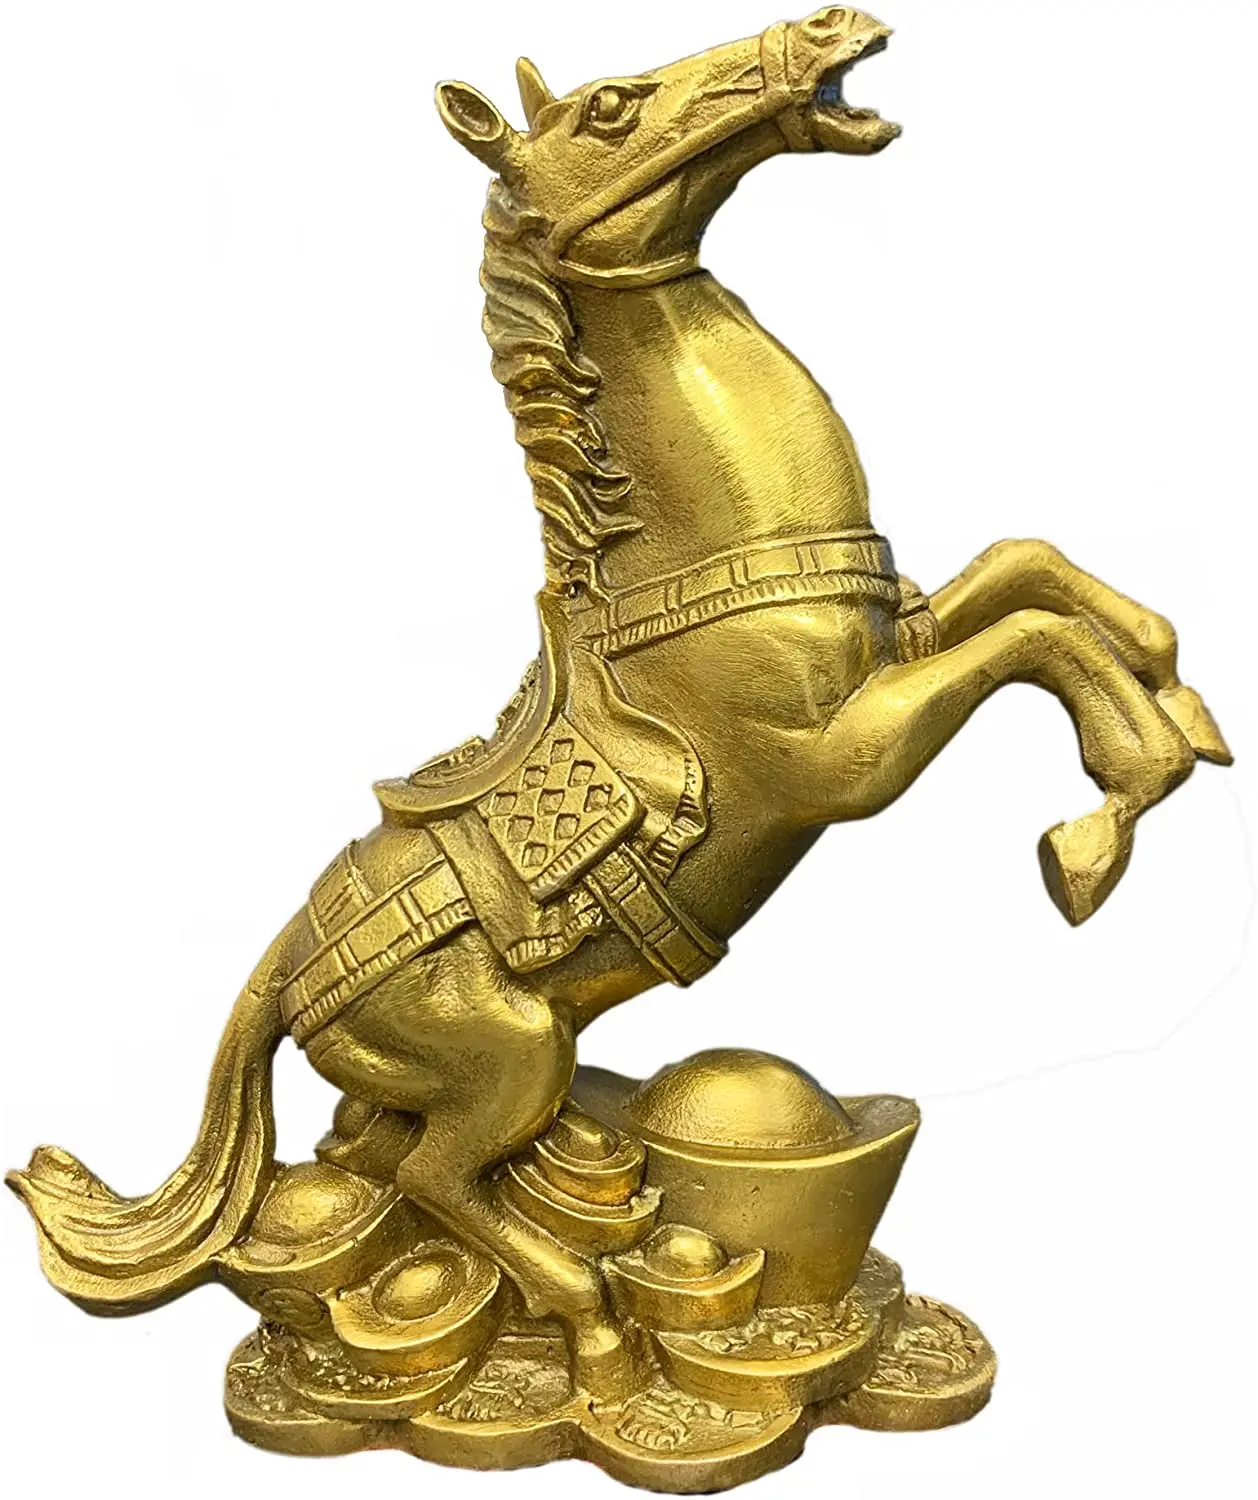 

Feng Shui Rich Horse Brass Statue Home Decor Figurine Attract Money and Good Luck Wealth Decoration Sculpture Golden(5.